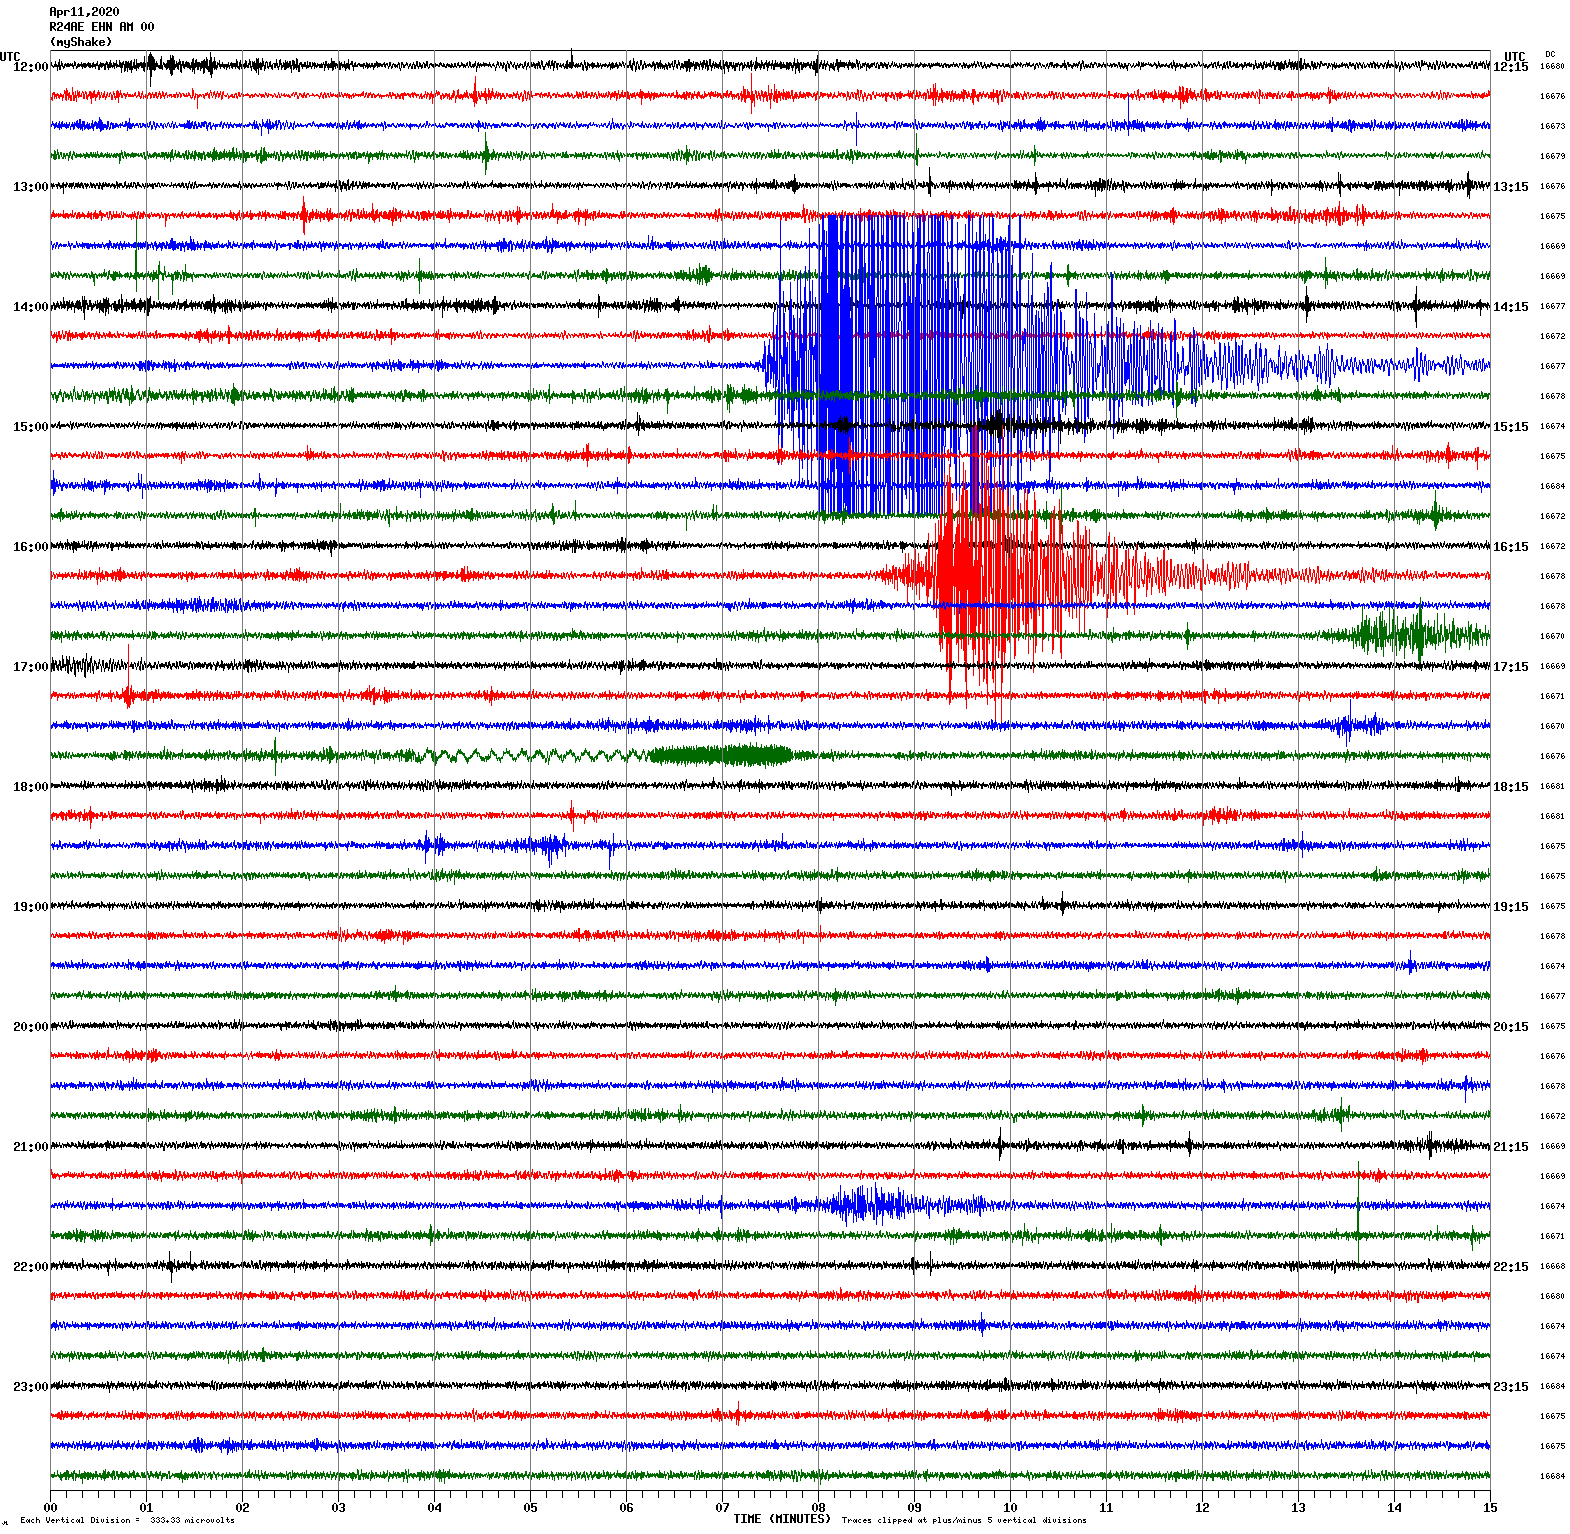 /seismic-data/R24AE/R24AE_EHN_AM_00.2020041112.gif